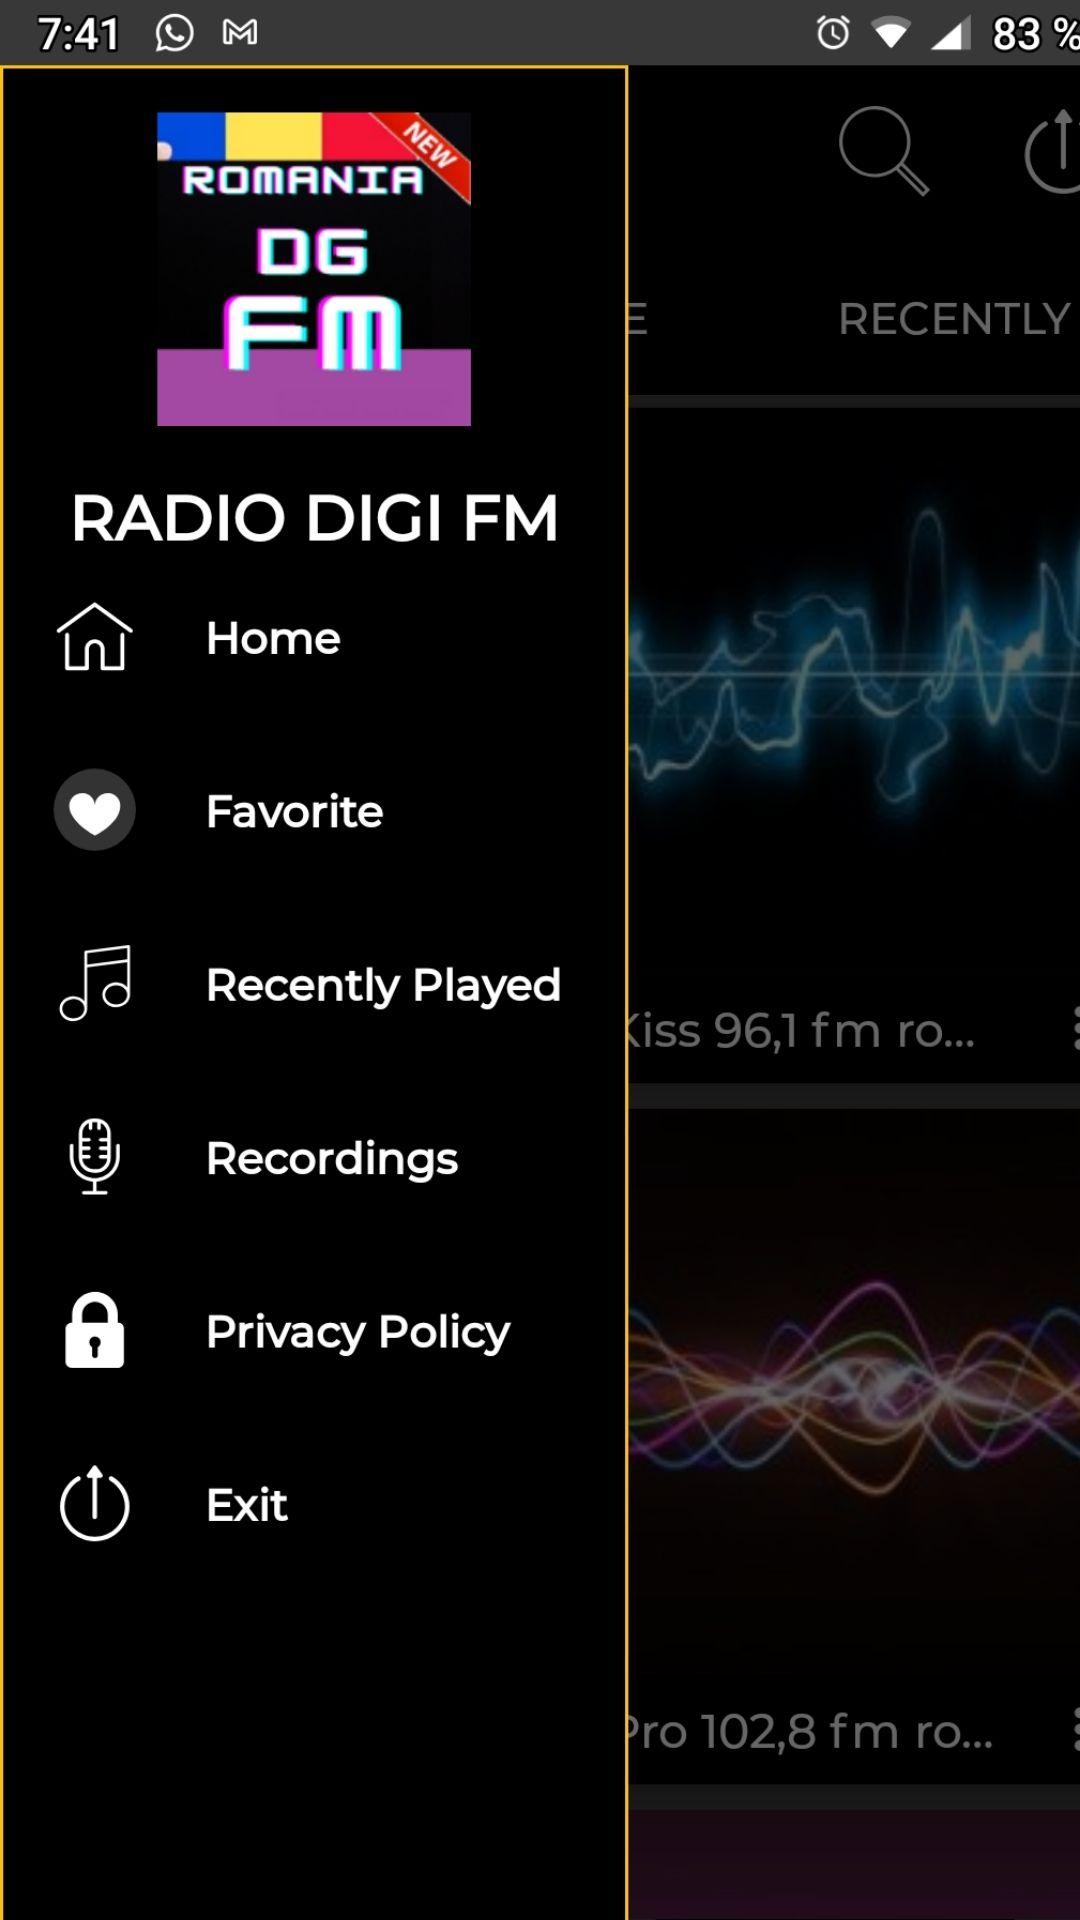 Radio Digi FM Radio Online app for Android - APK Download